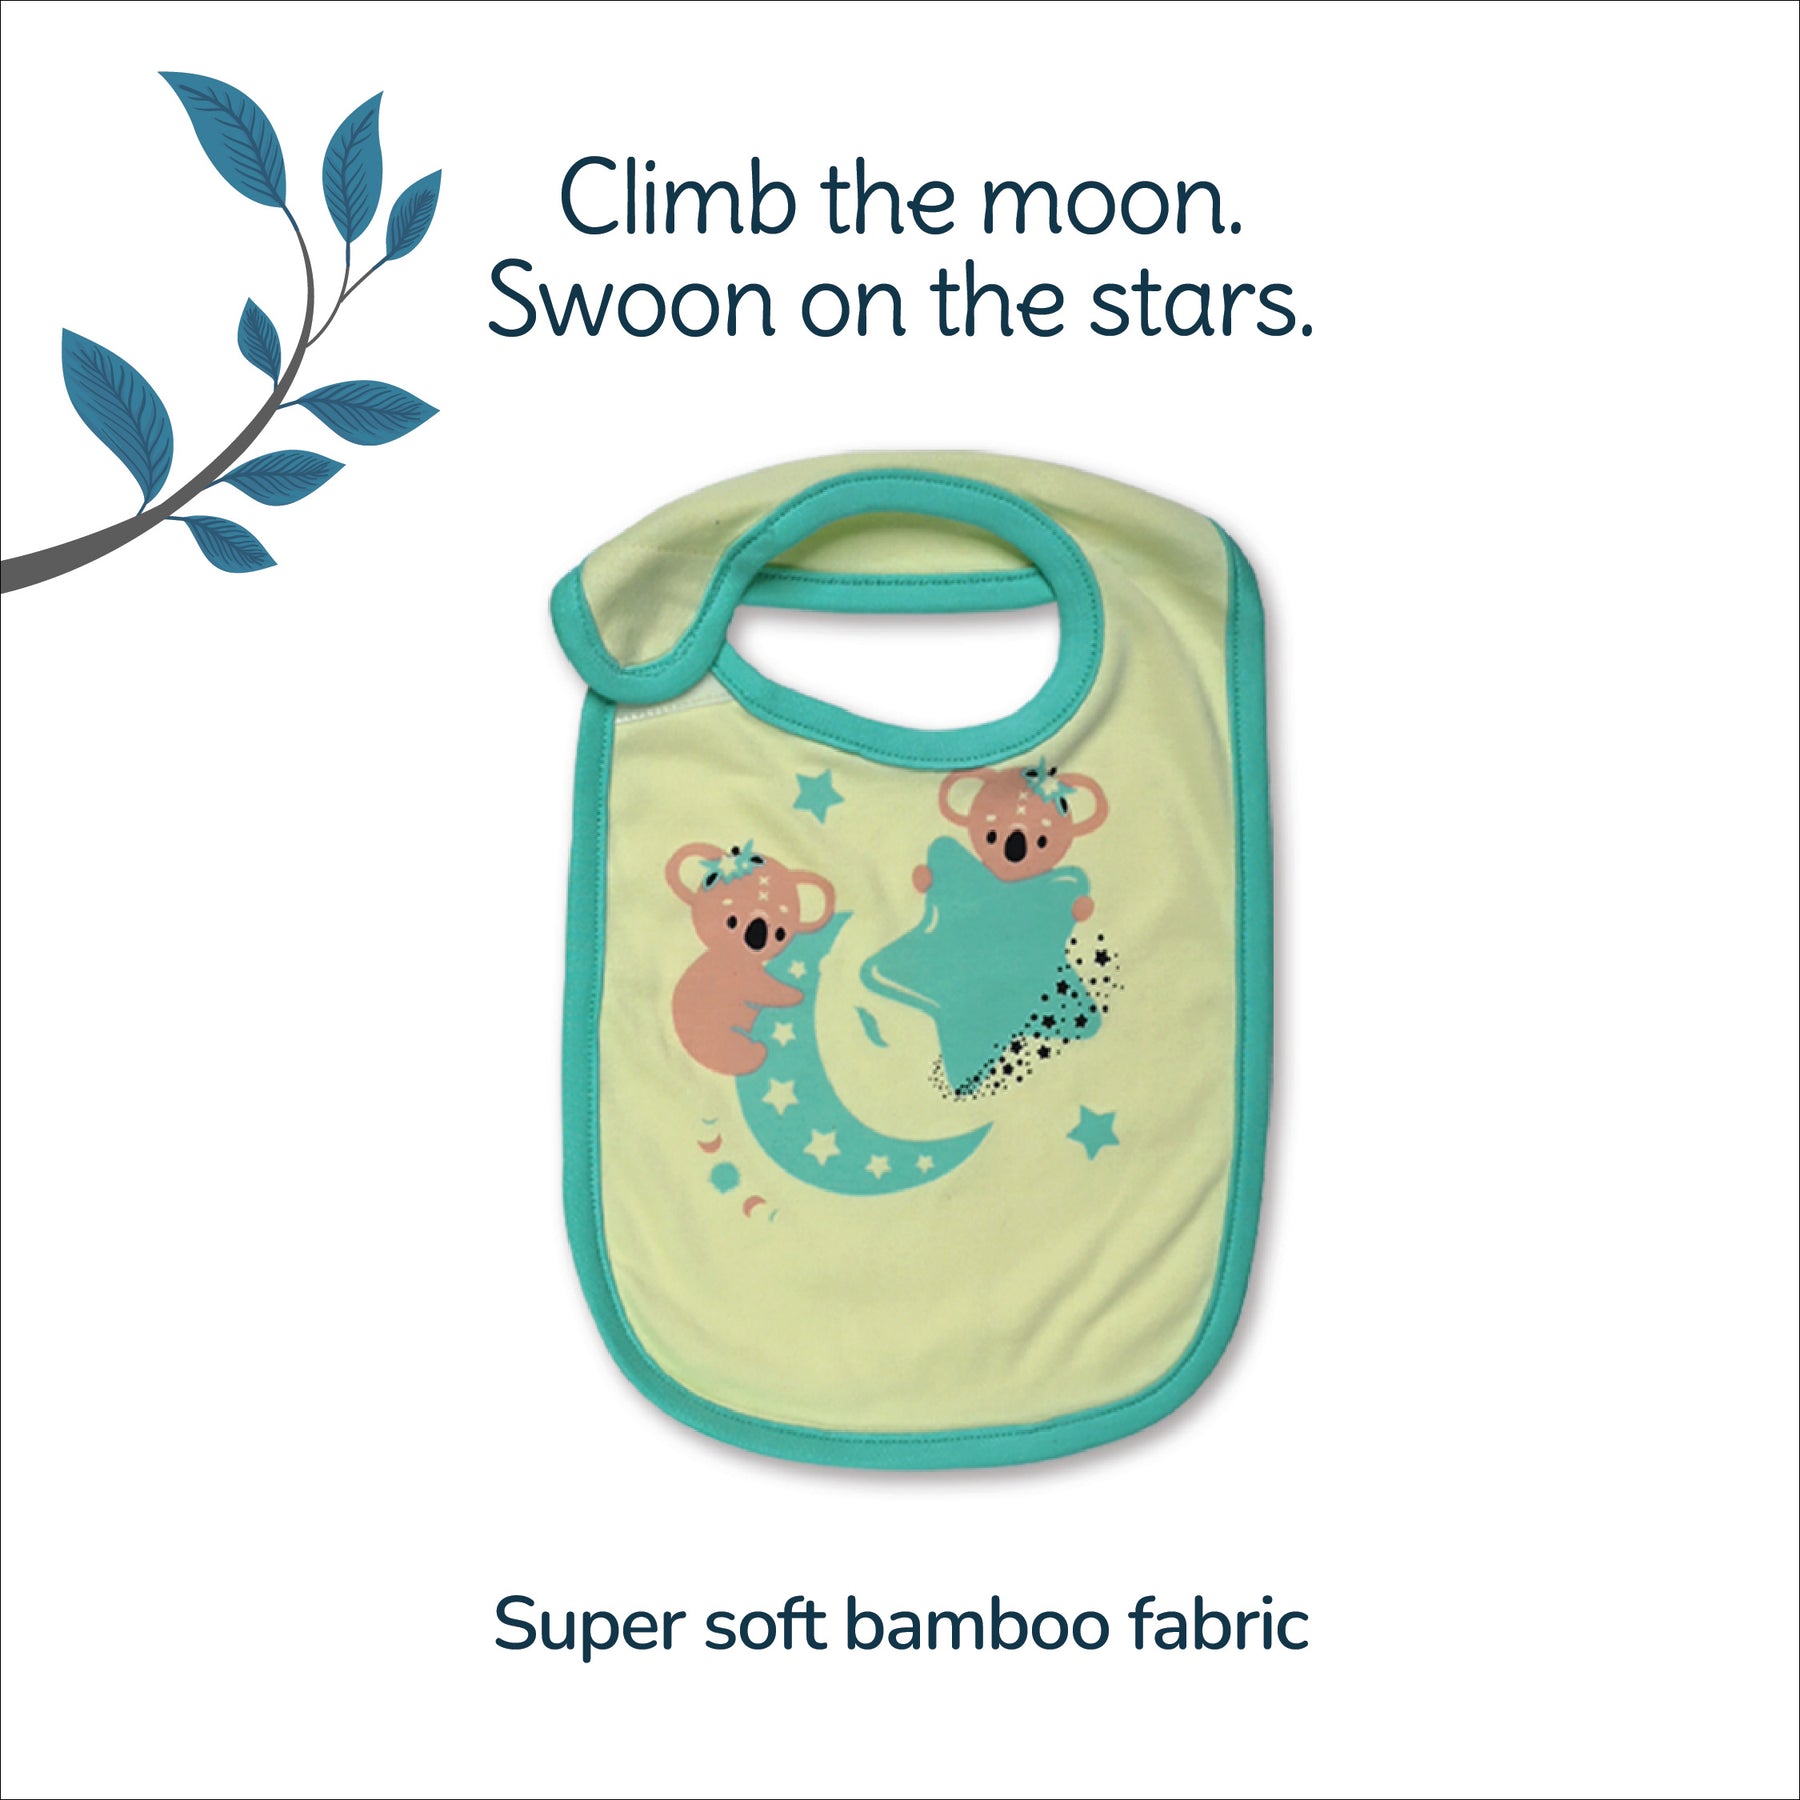 Sunny Baby Clothing Set | Magical Flite Jhabla, Legging, & Krescent Koala Bib